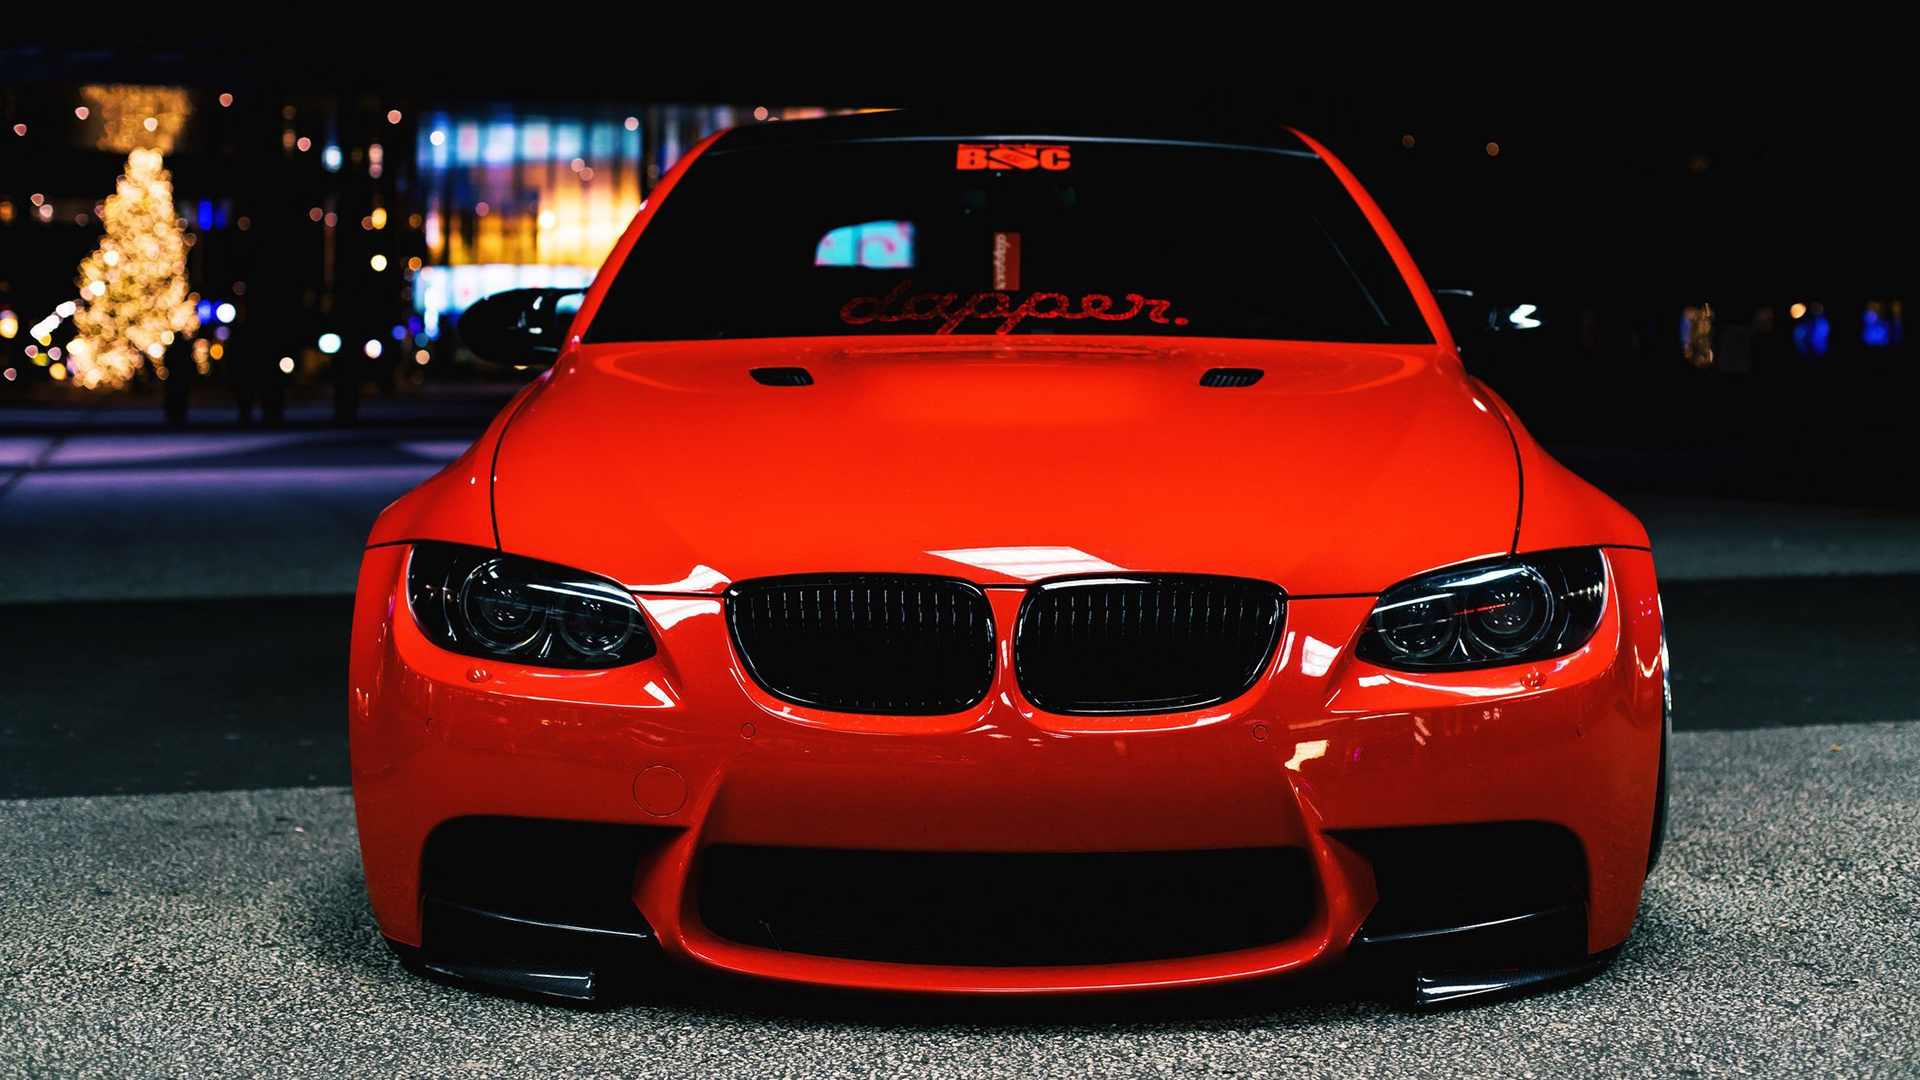 HD wallpaper: BMW E91 Car Tuning